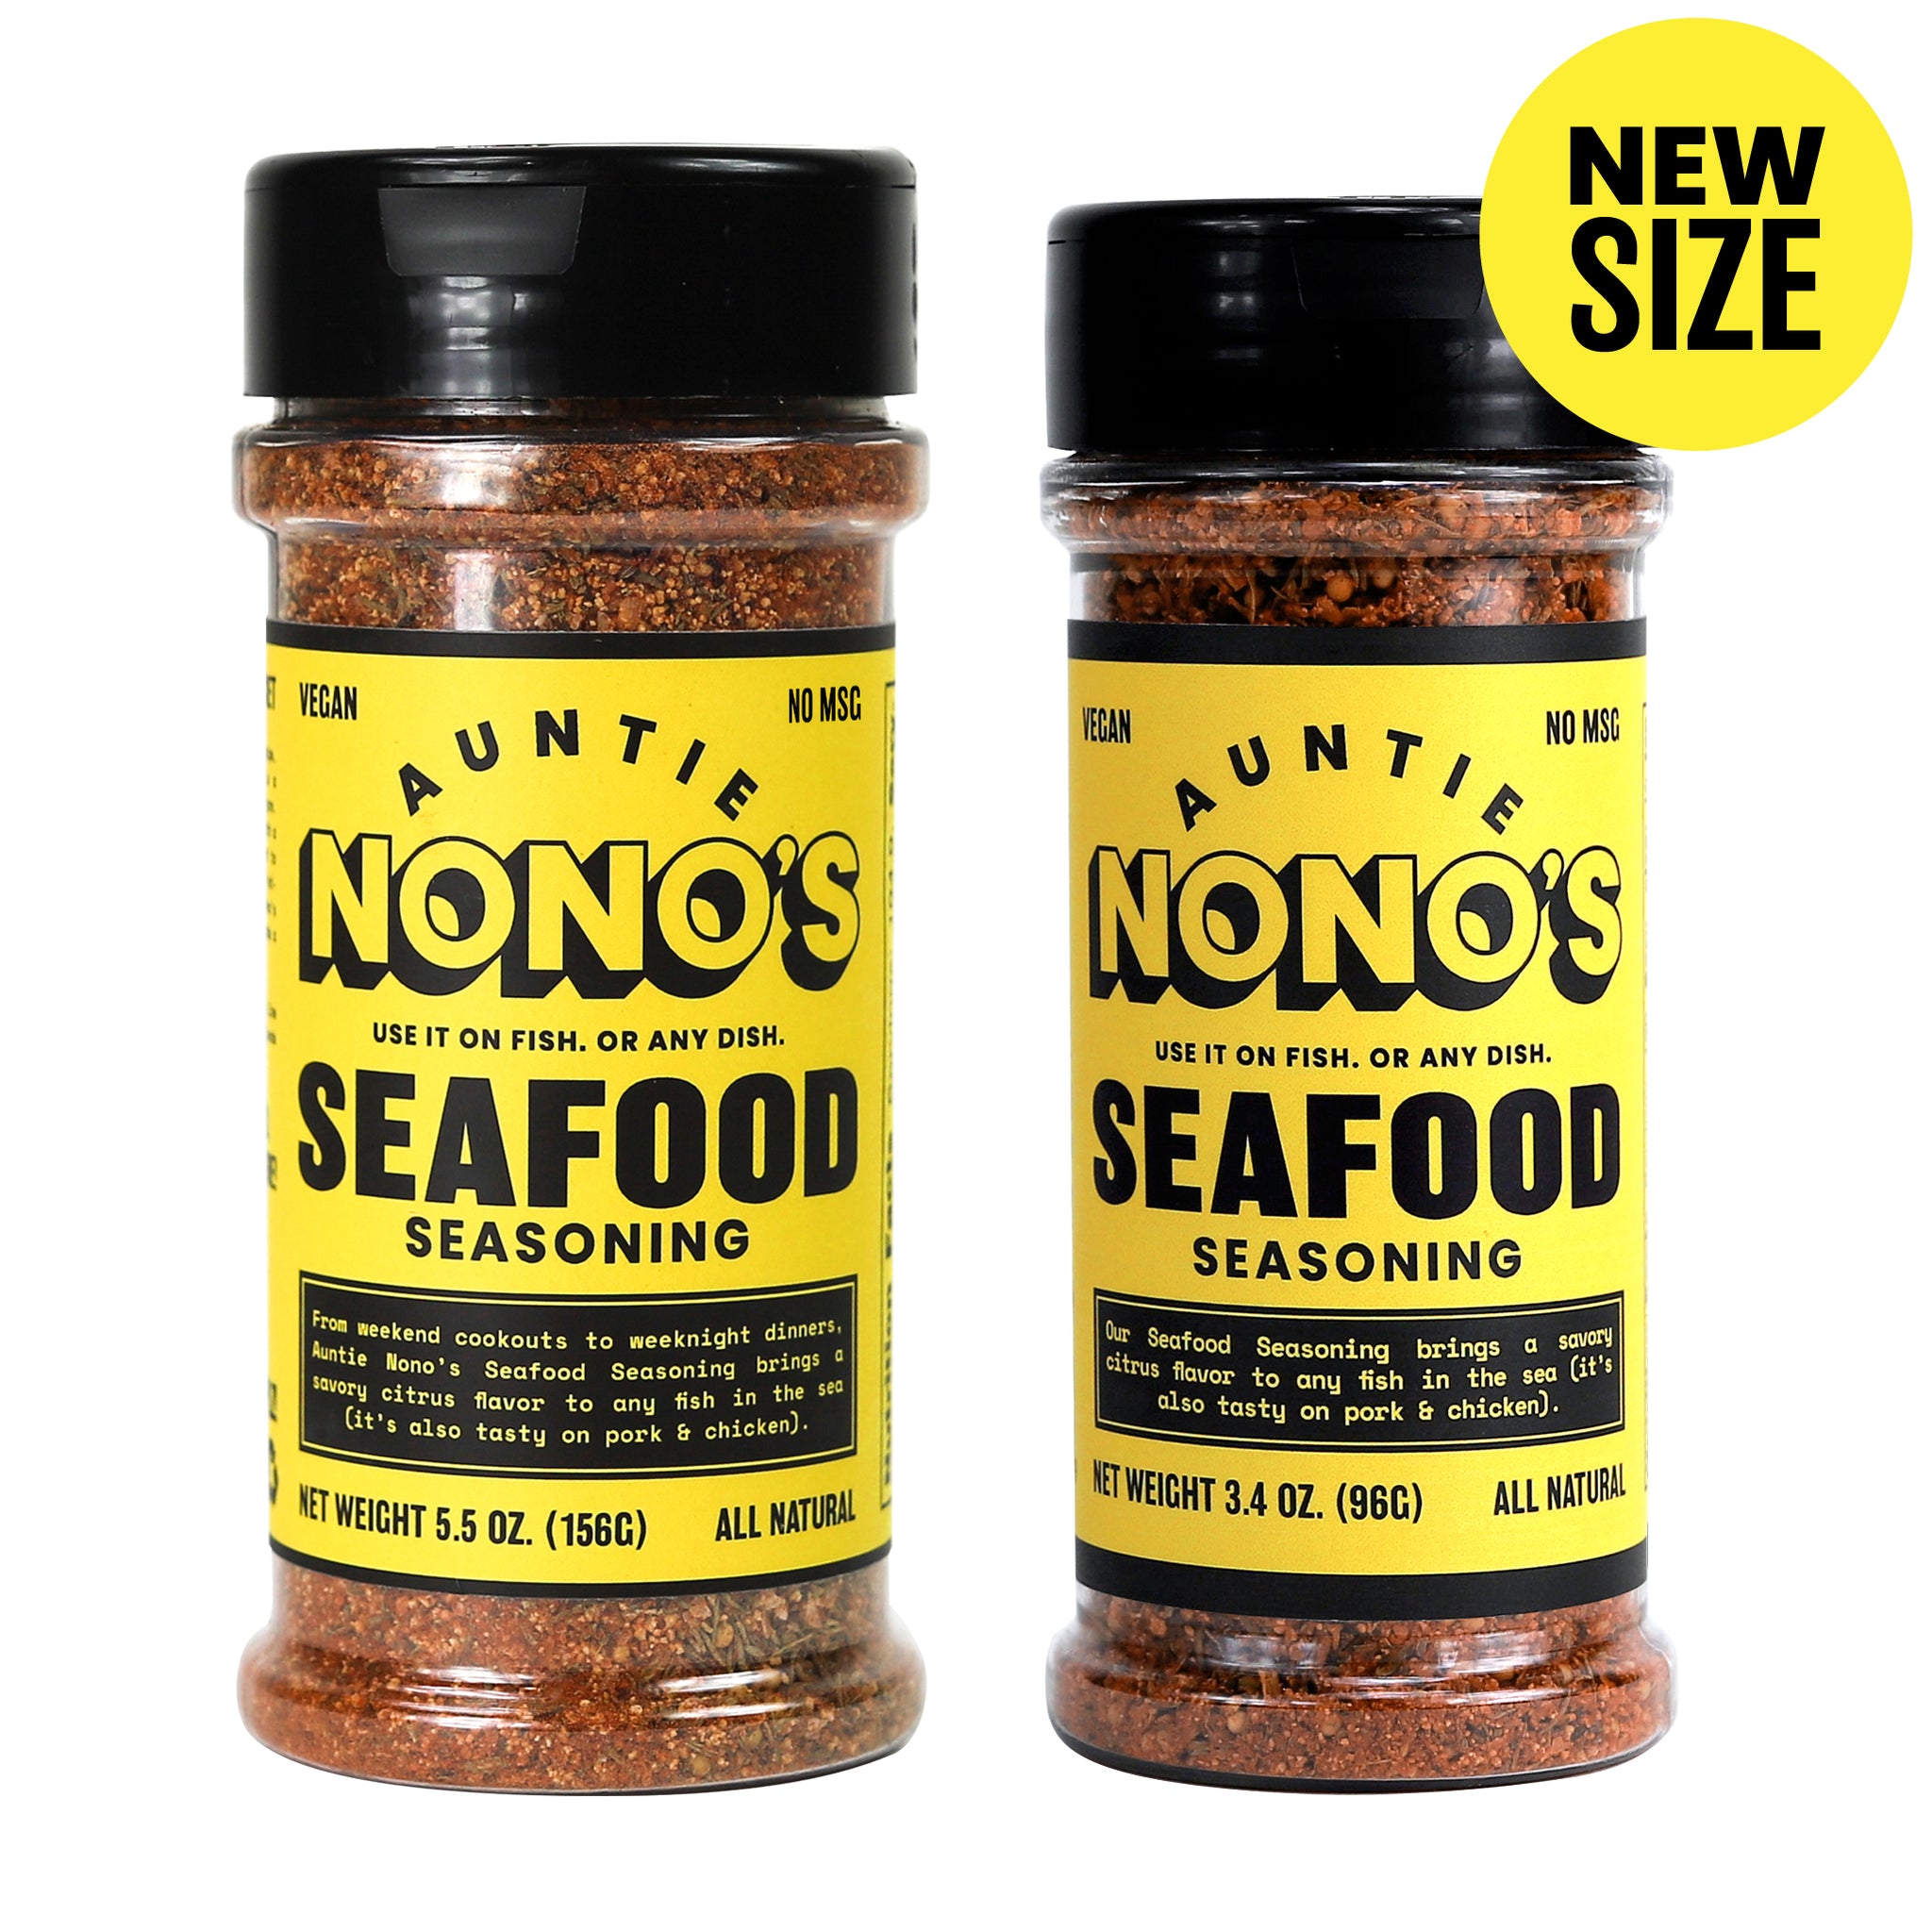 Auntie Nono's Seafood Seasoning